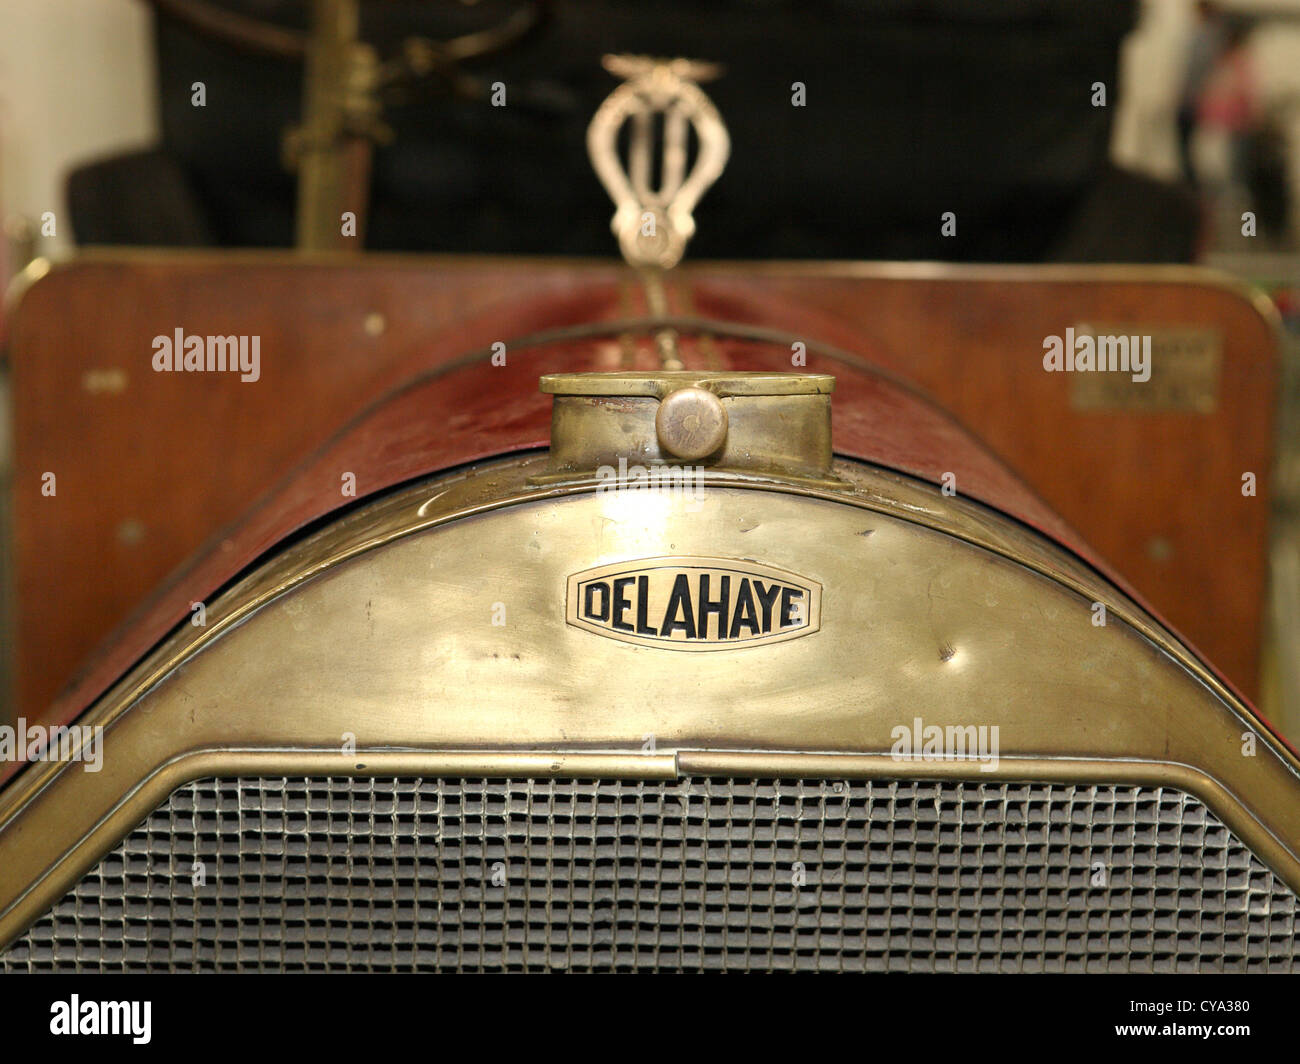 Delahaye badge on vintage car Stock Photo